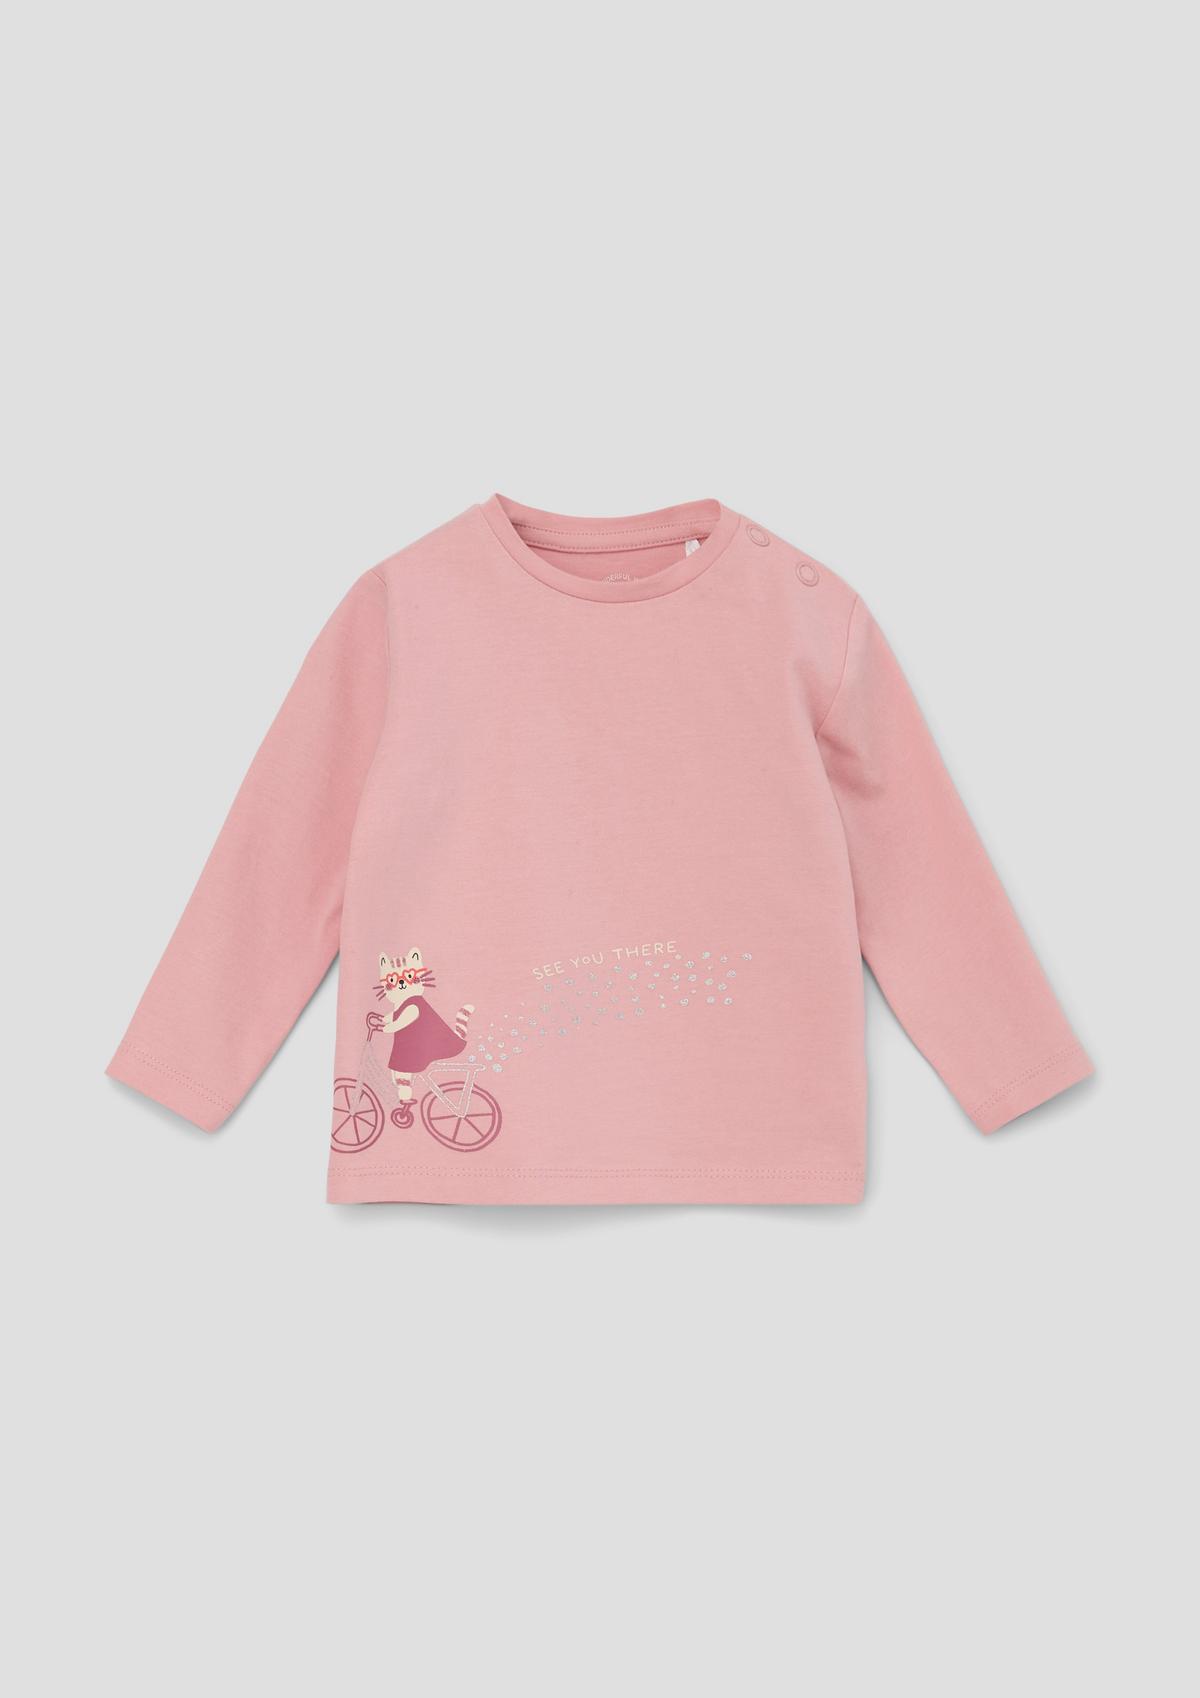 Shop baby tops for girls online